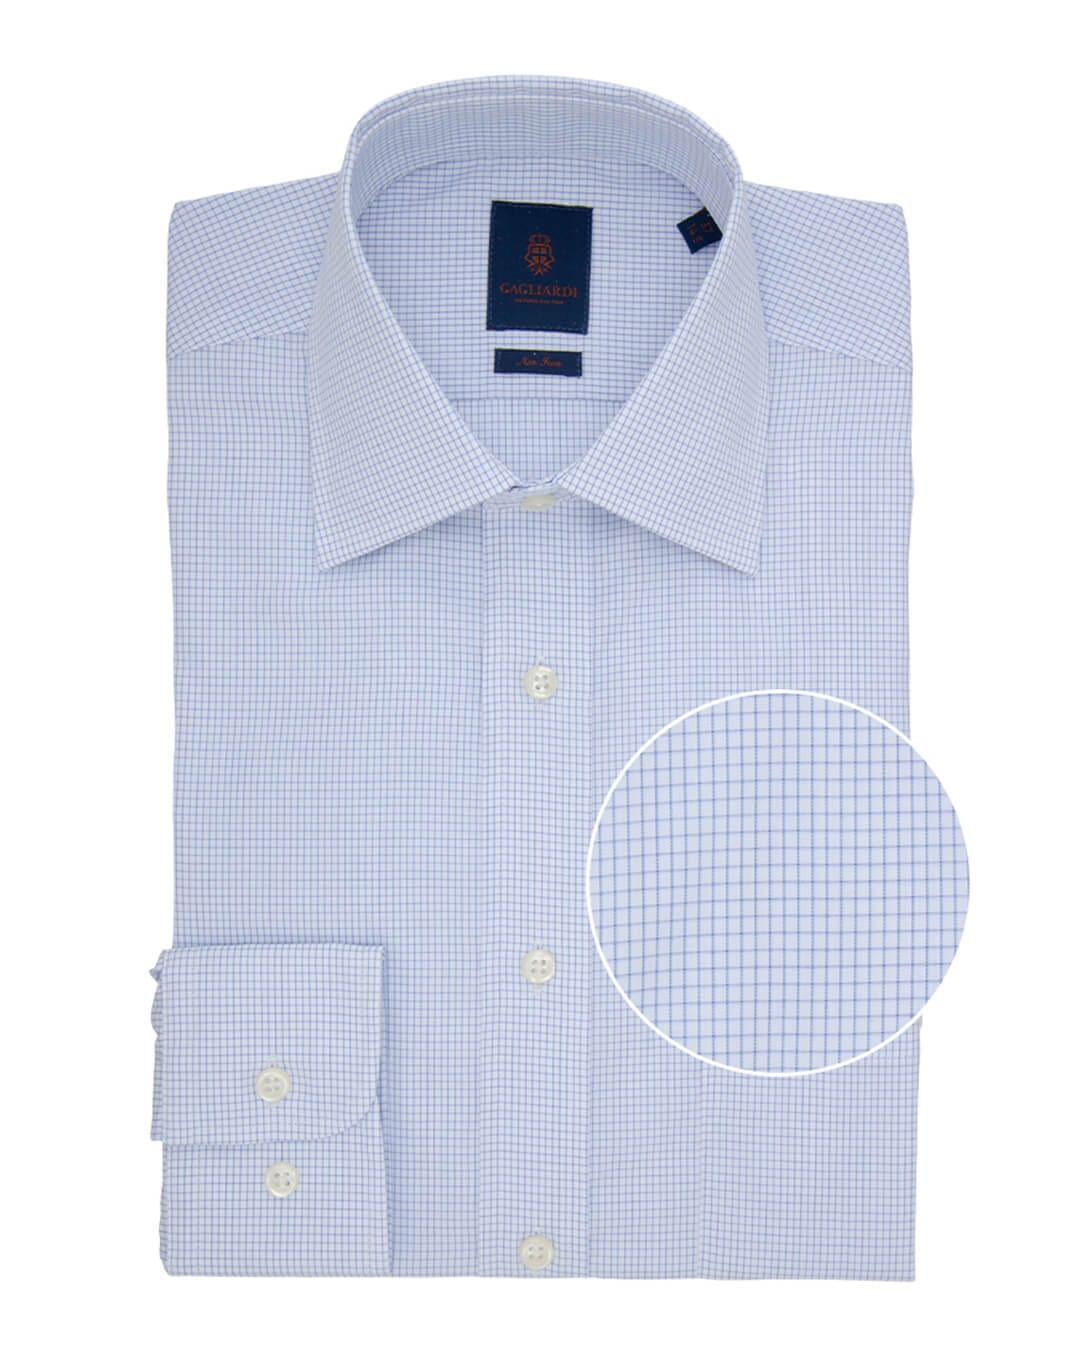 Gagliardi Shirts Gagliardi Tailored Fit White with Blue Mini Windowpane Poplin Cotton Non Iron Shirt